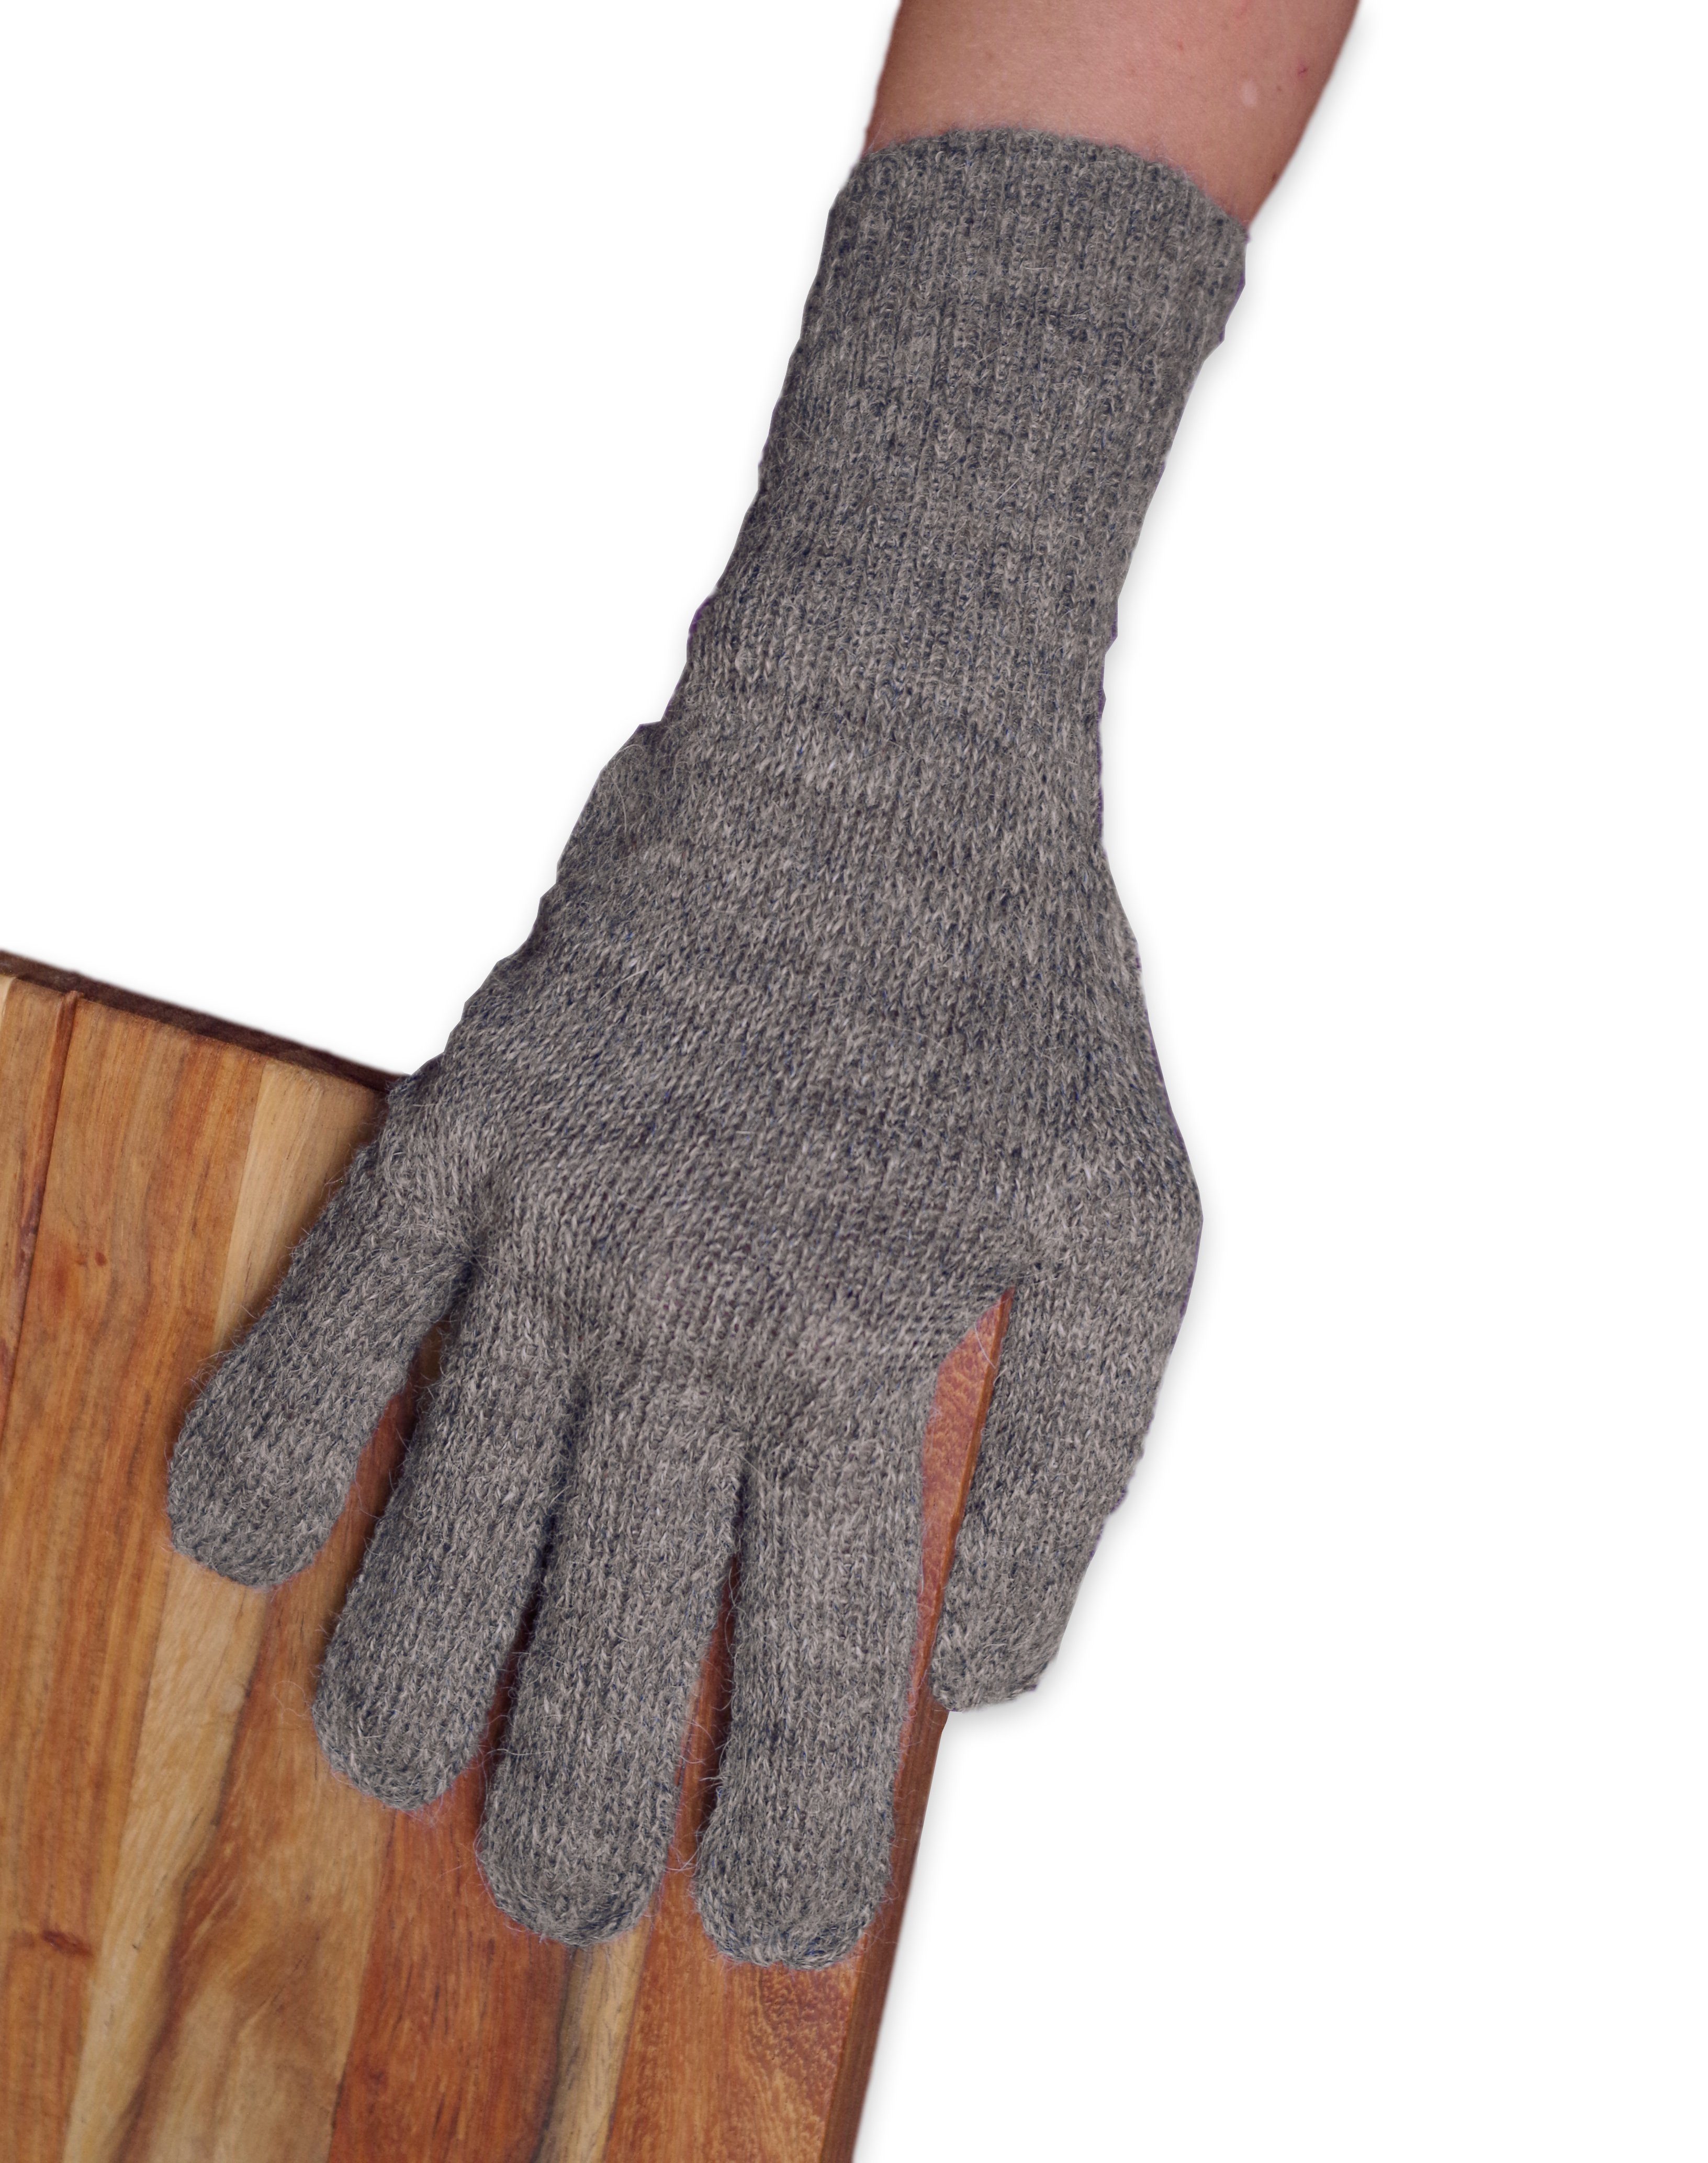 Posh Gear Strickhandschuhe Guantino grau Alpakawolle aus 100% Alpaka Fingerhandschuhe dunkel